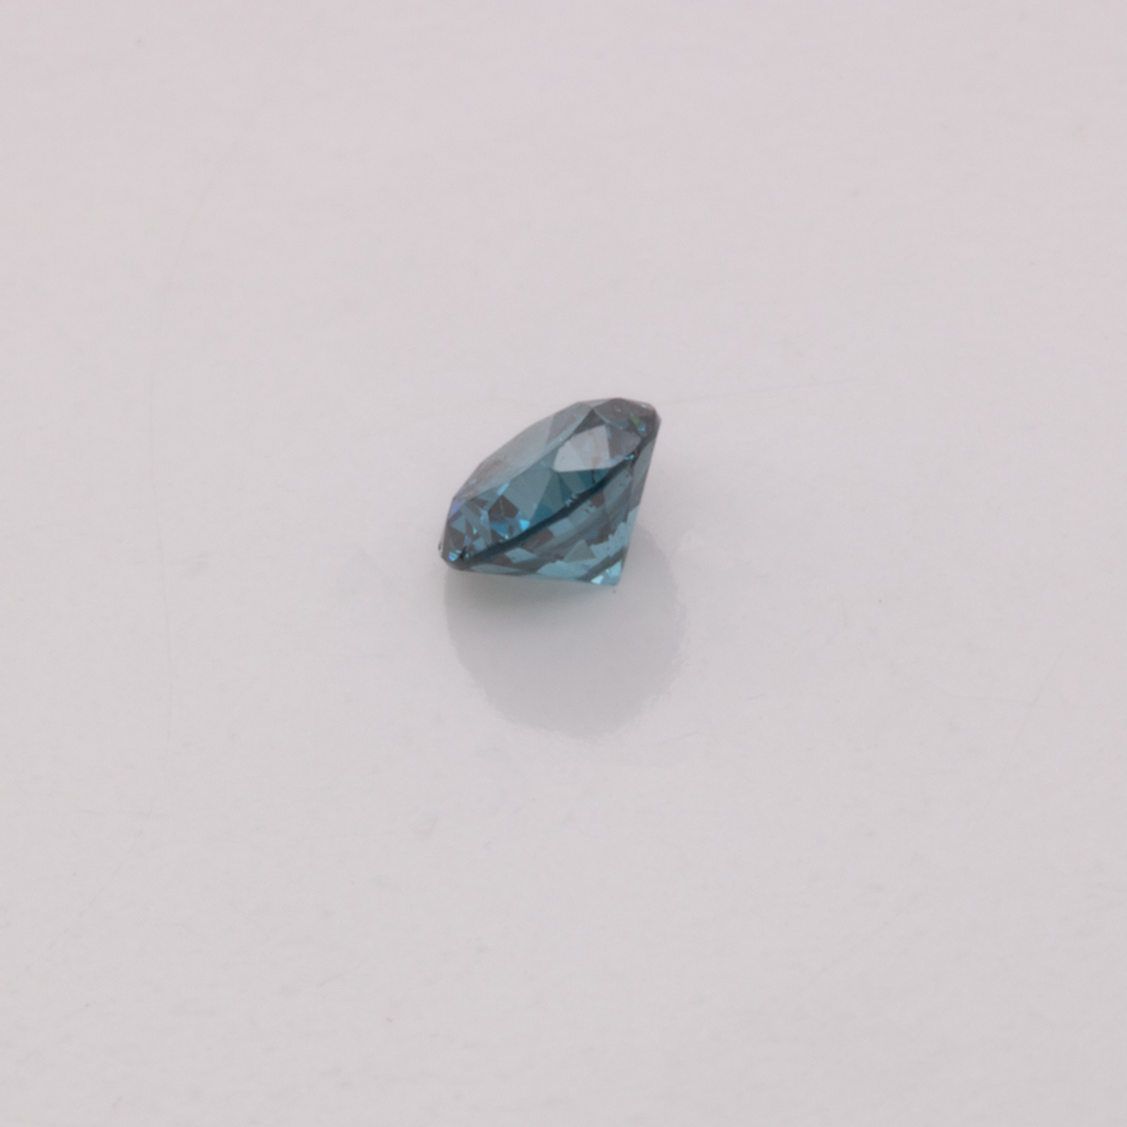 Diamant - blau, VS, rund, 2.0 mm, ca. 0.03 cts, Nr. D11066